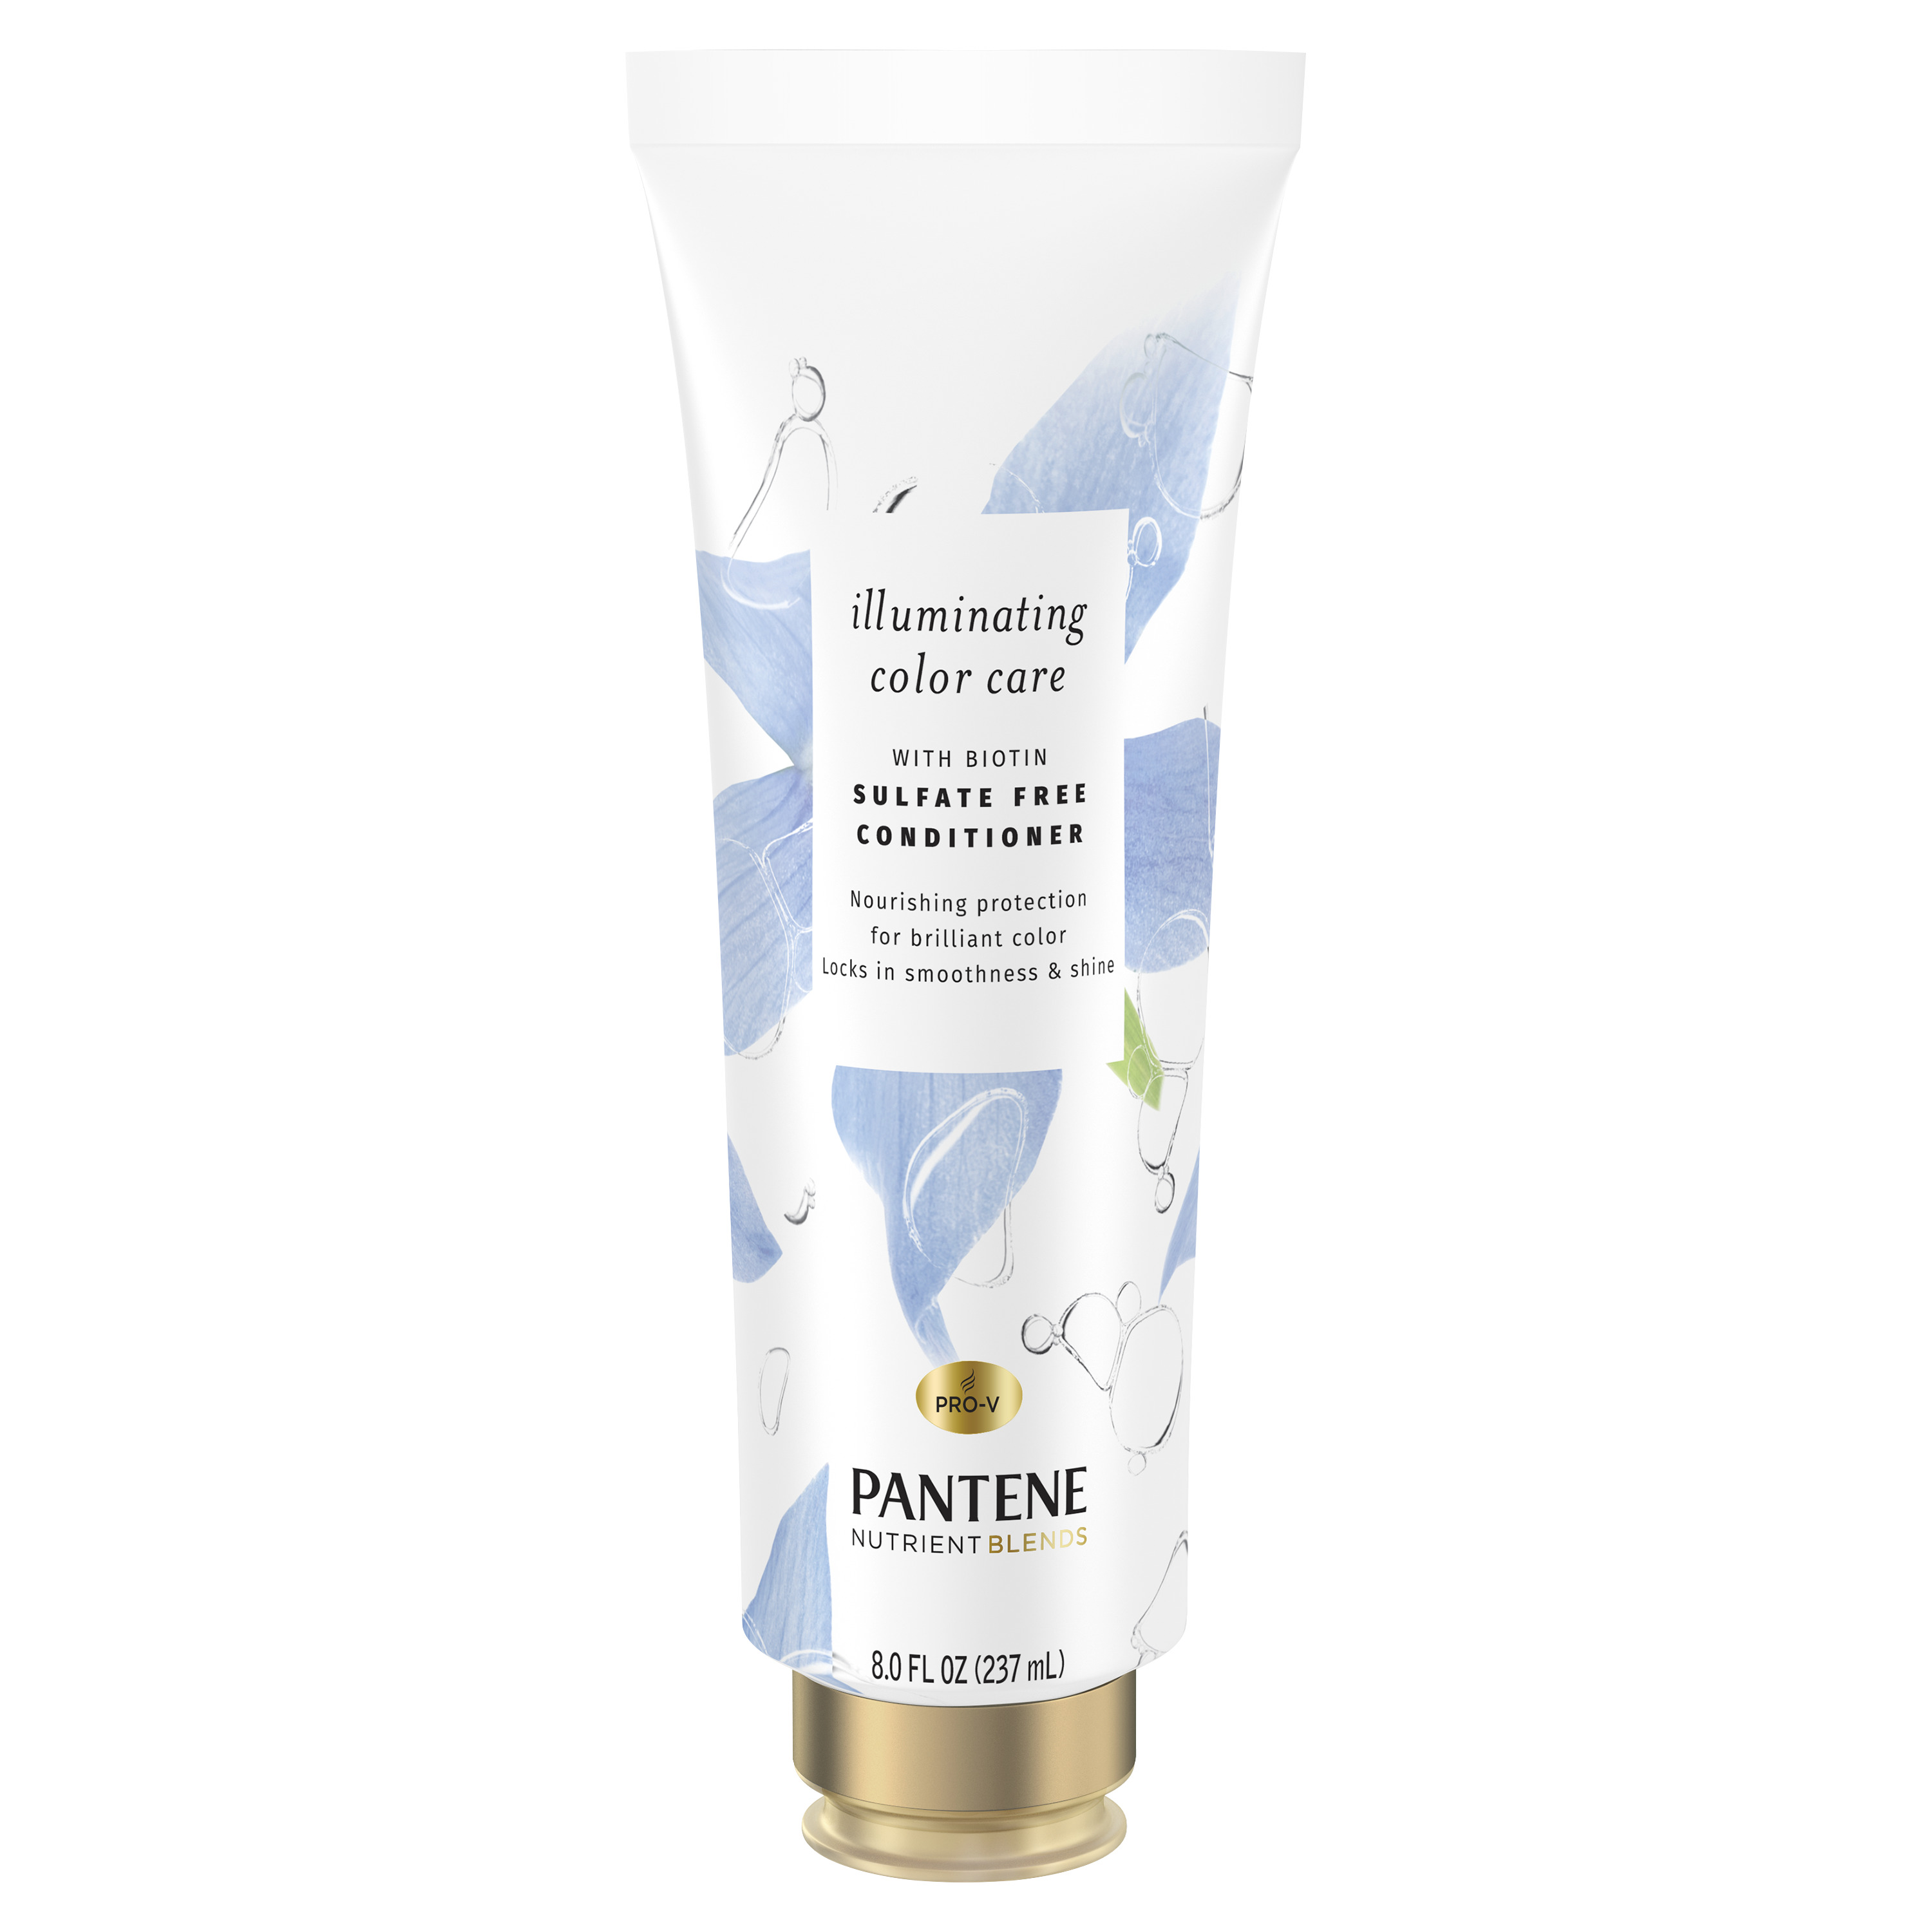 Pantene Nutrient Blends Illuminating Color Care Conditioner